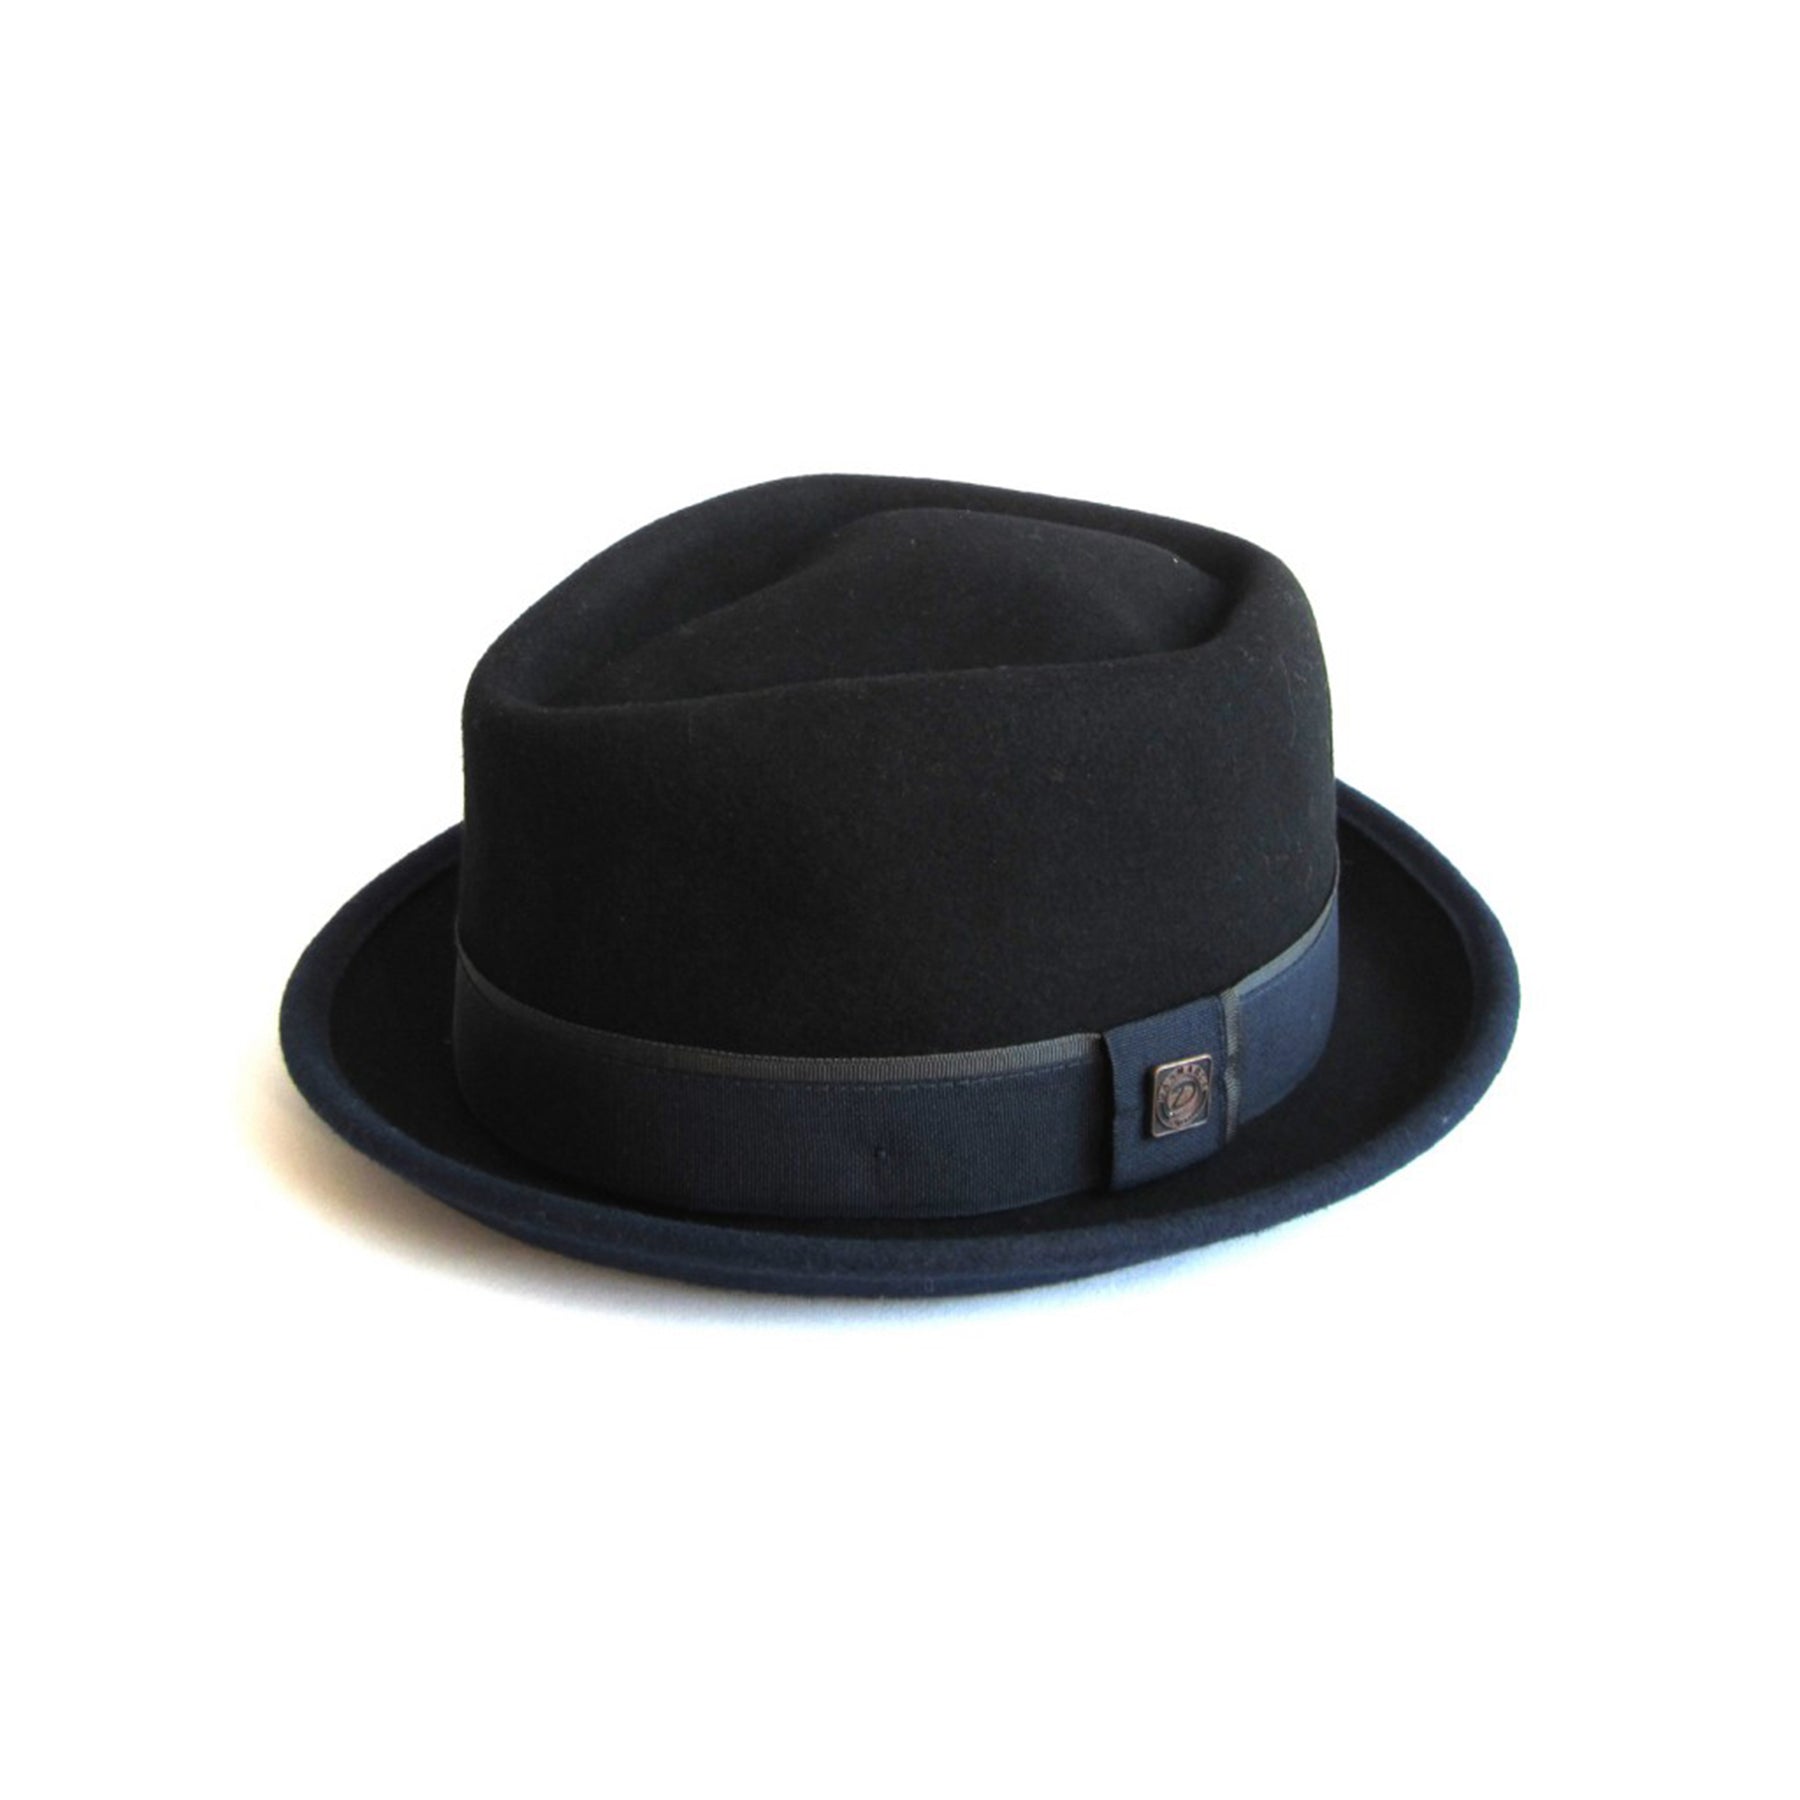 Edward Hat